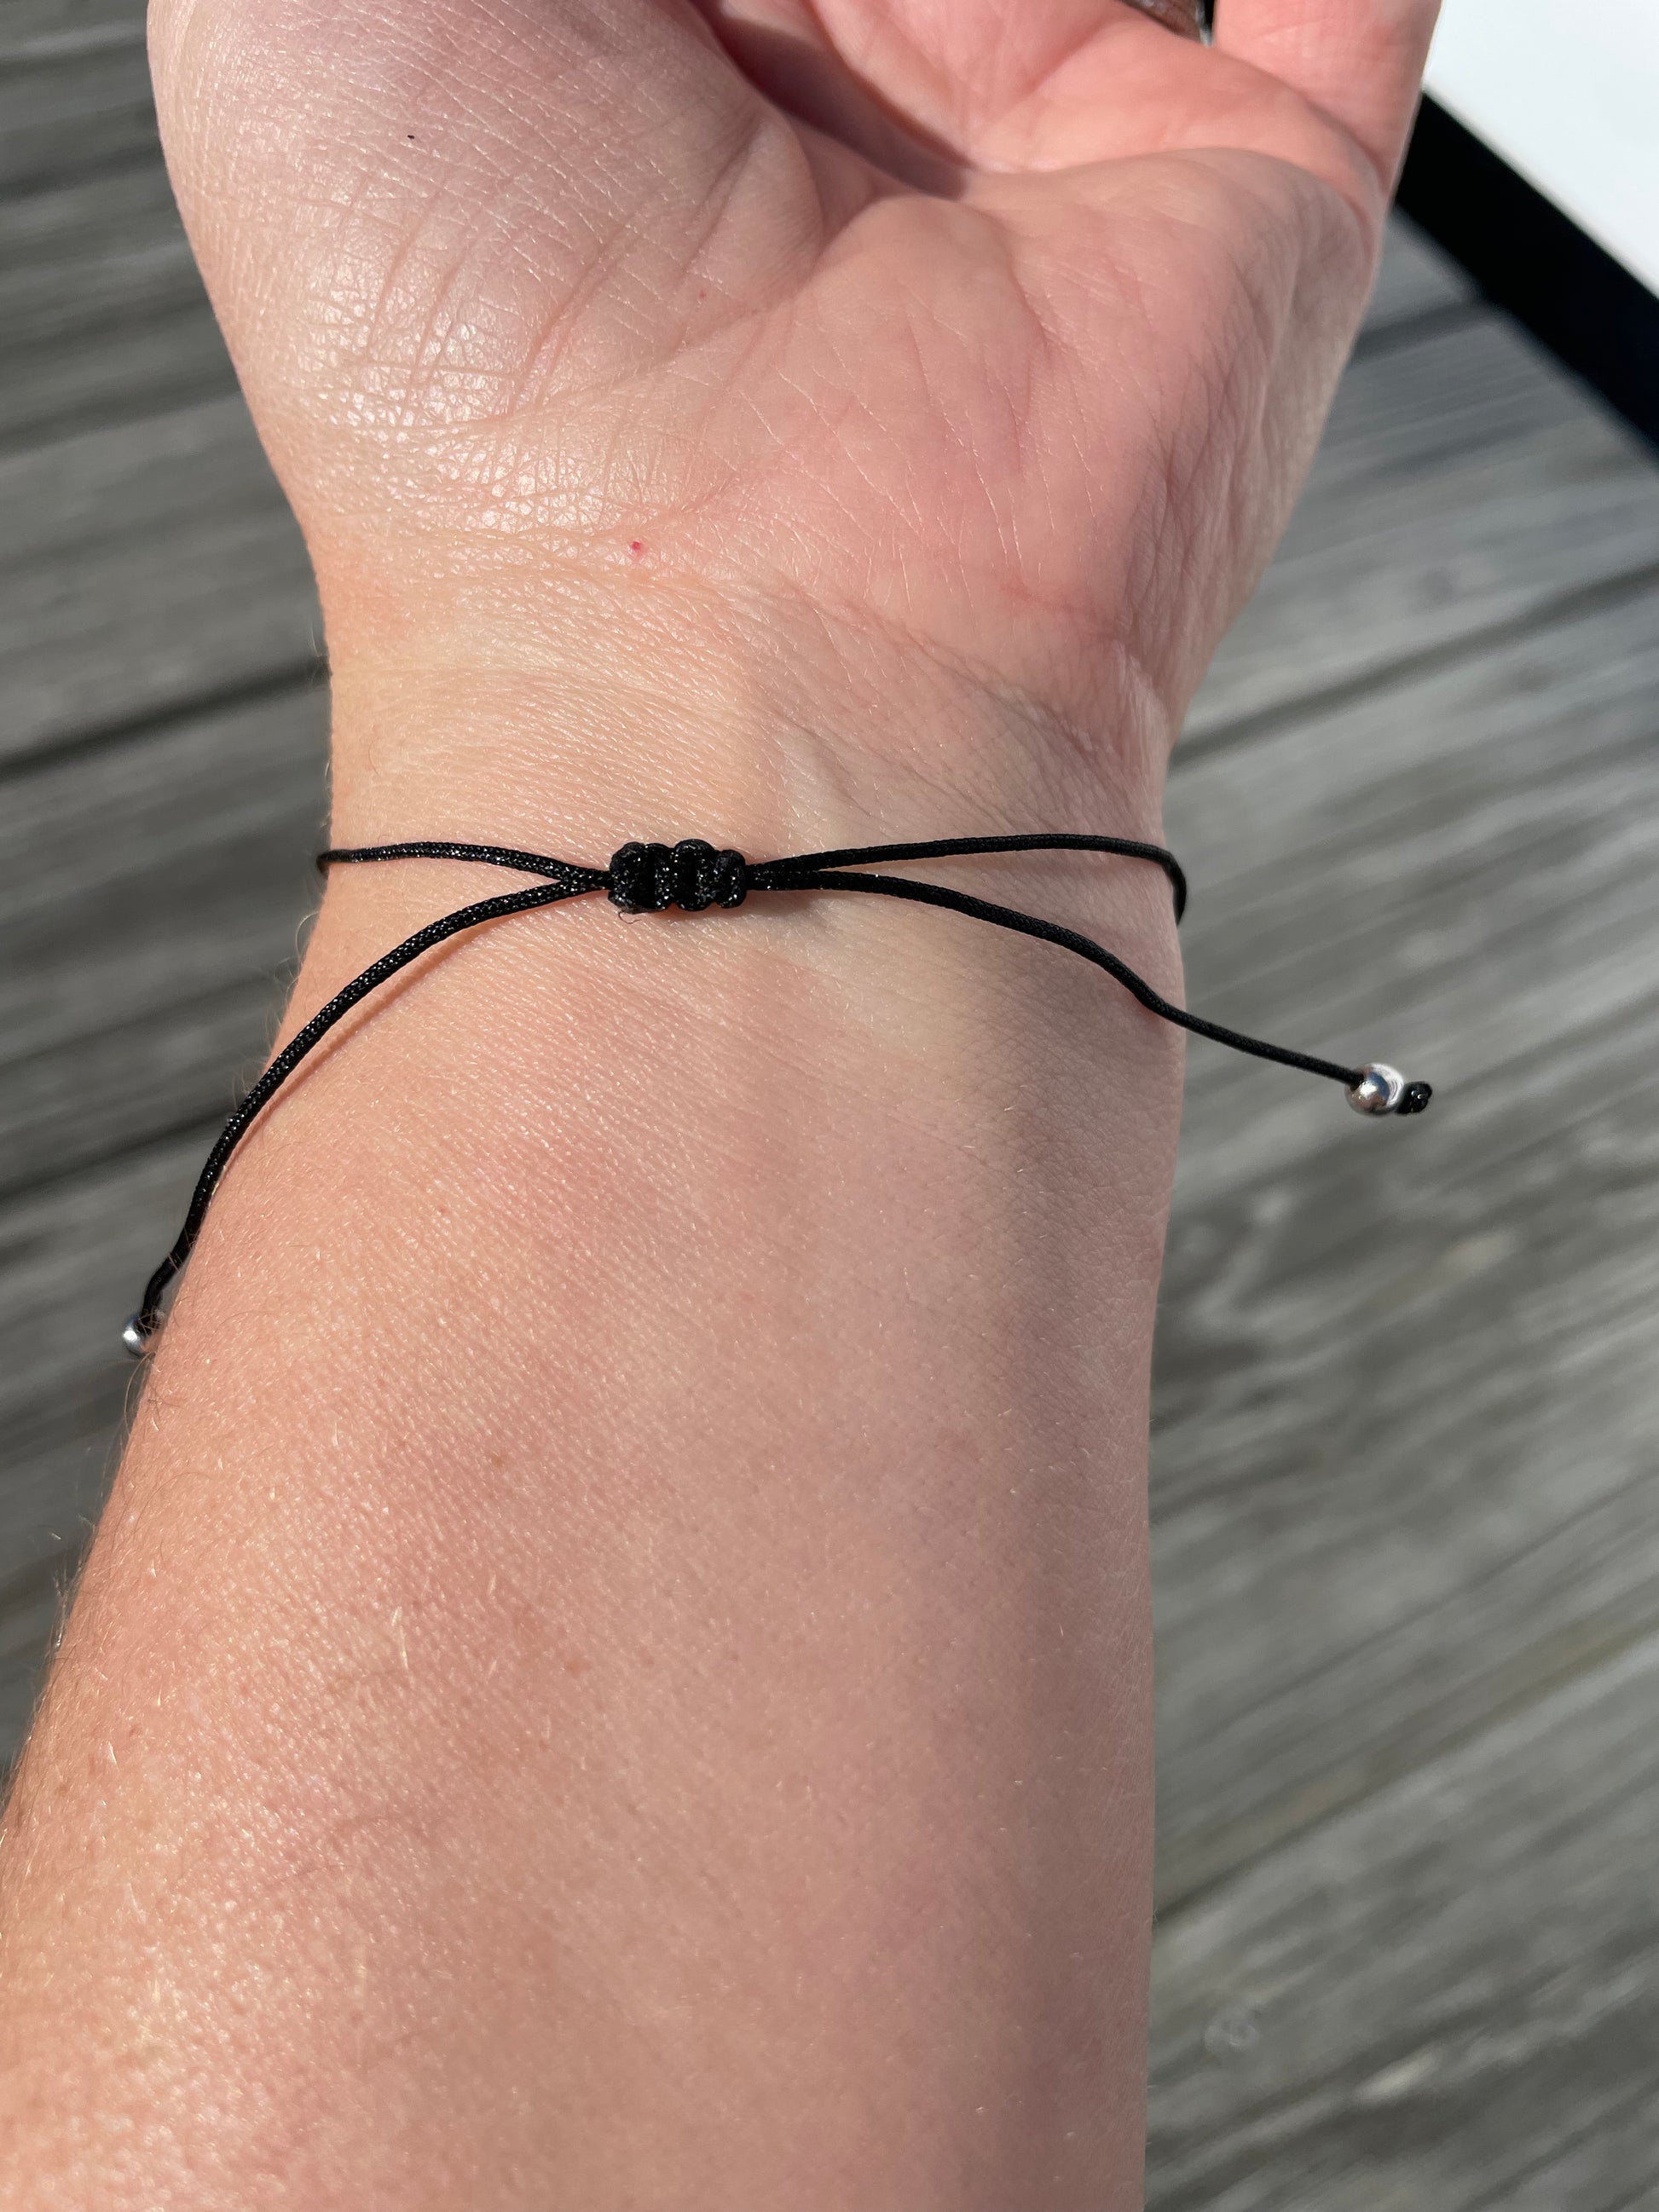 wrist wearing bracelet showing the adjustable knot